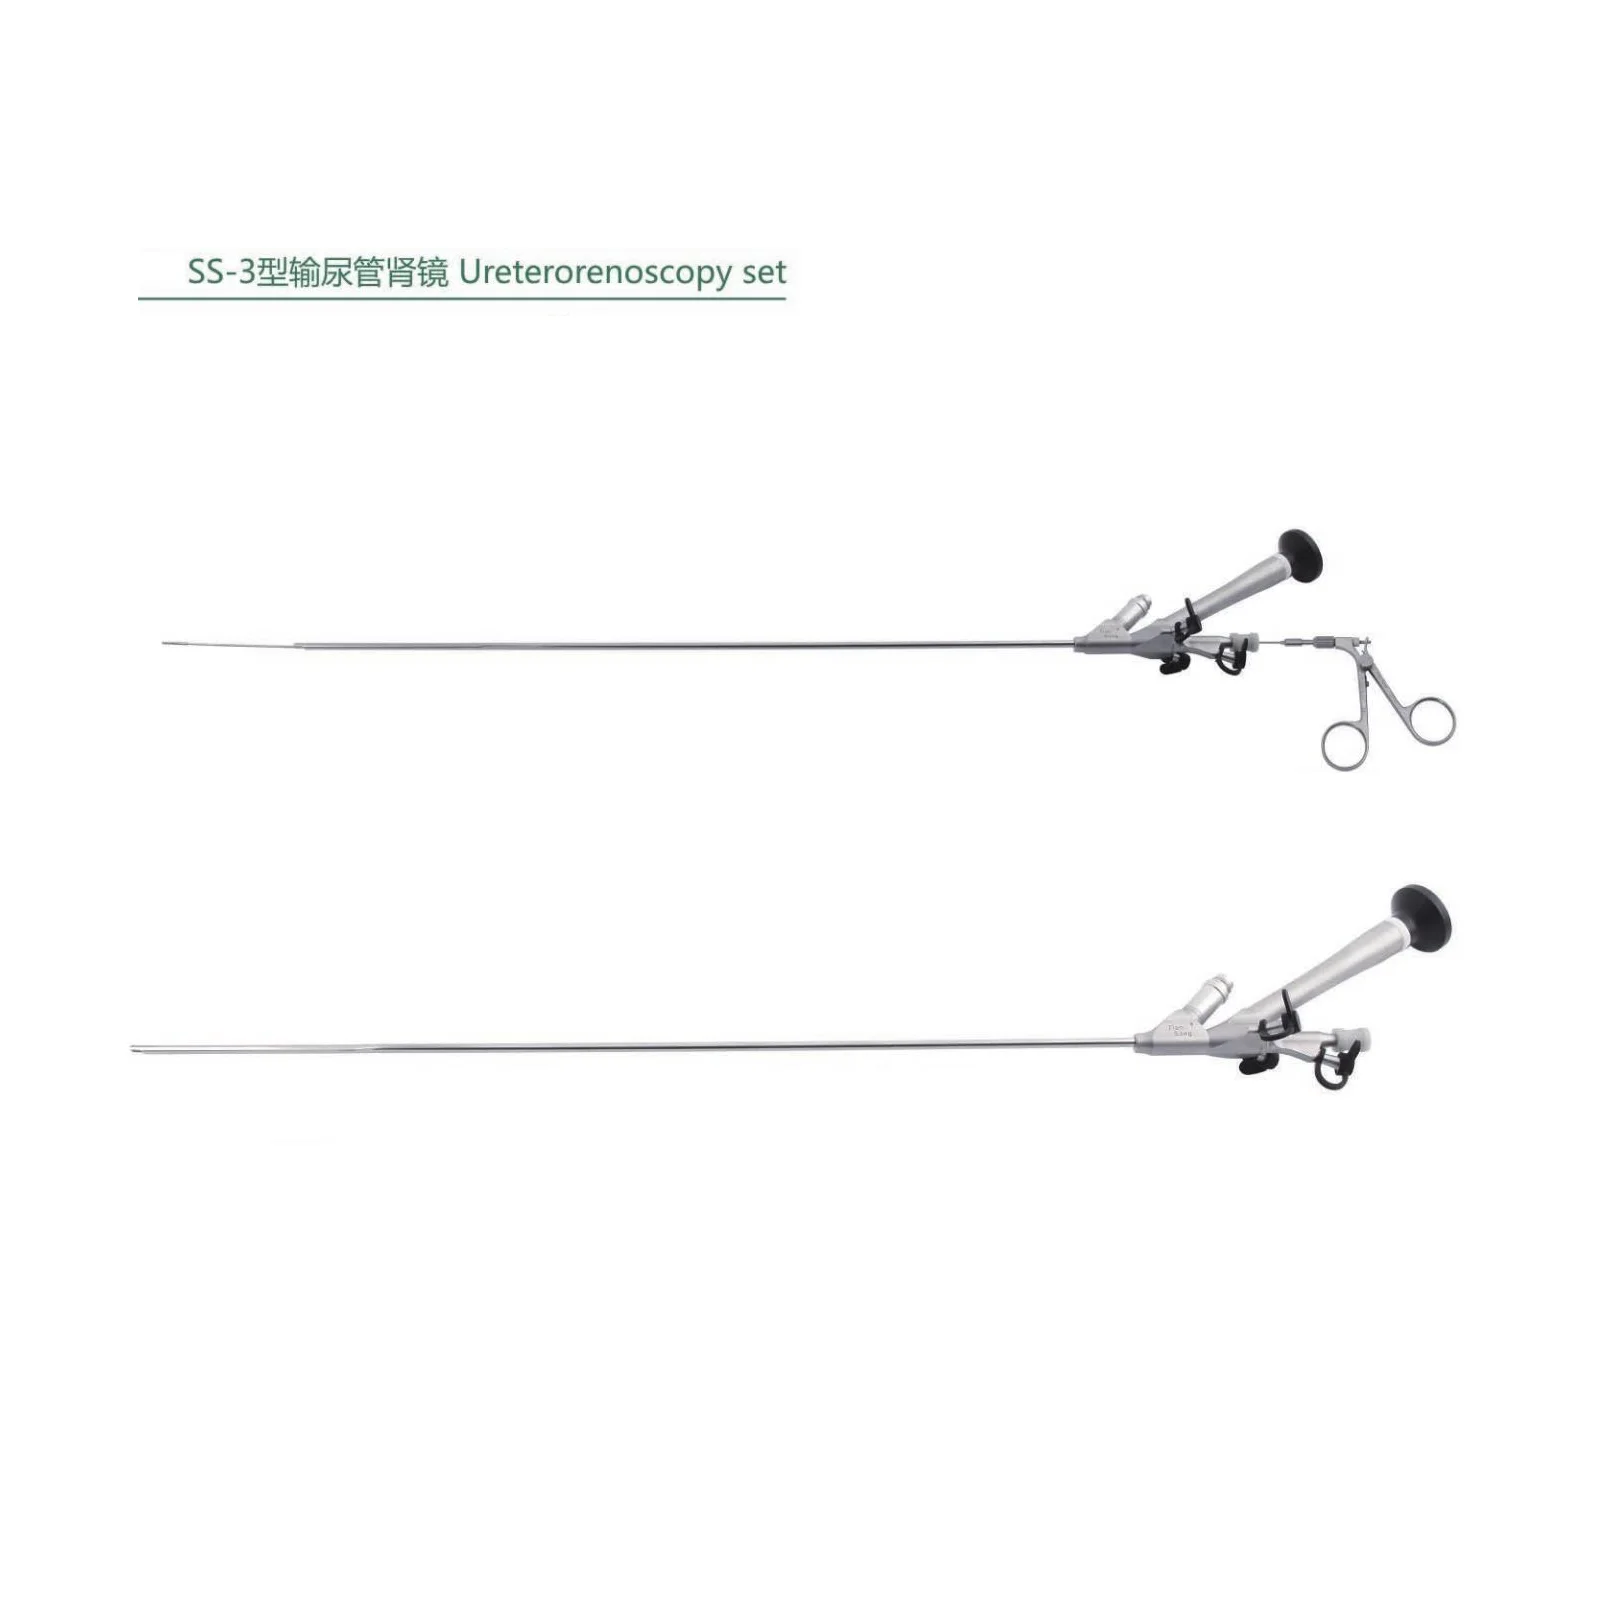 SS 3 Ureterorenoscopy set Urology Department Instruments (1600273780812)